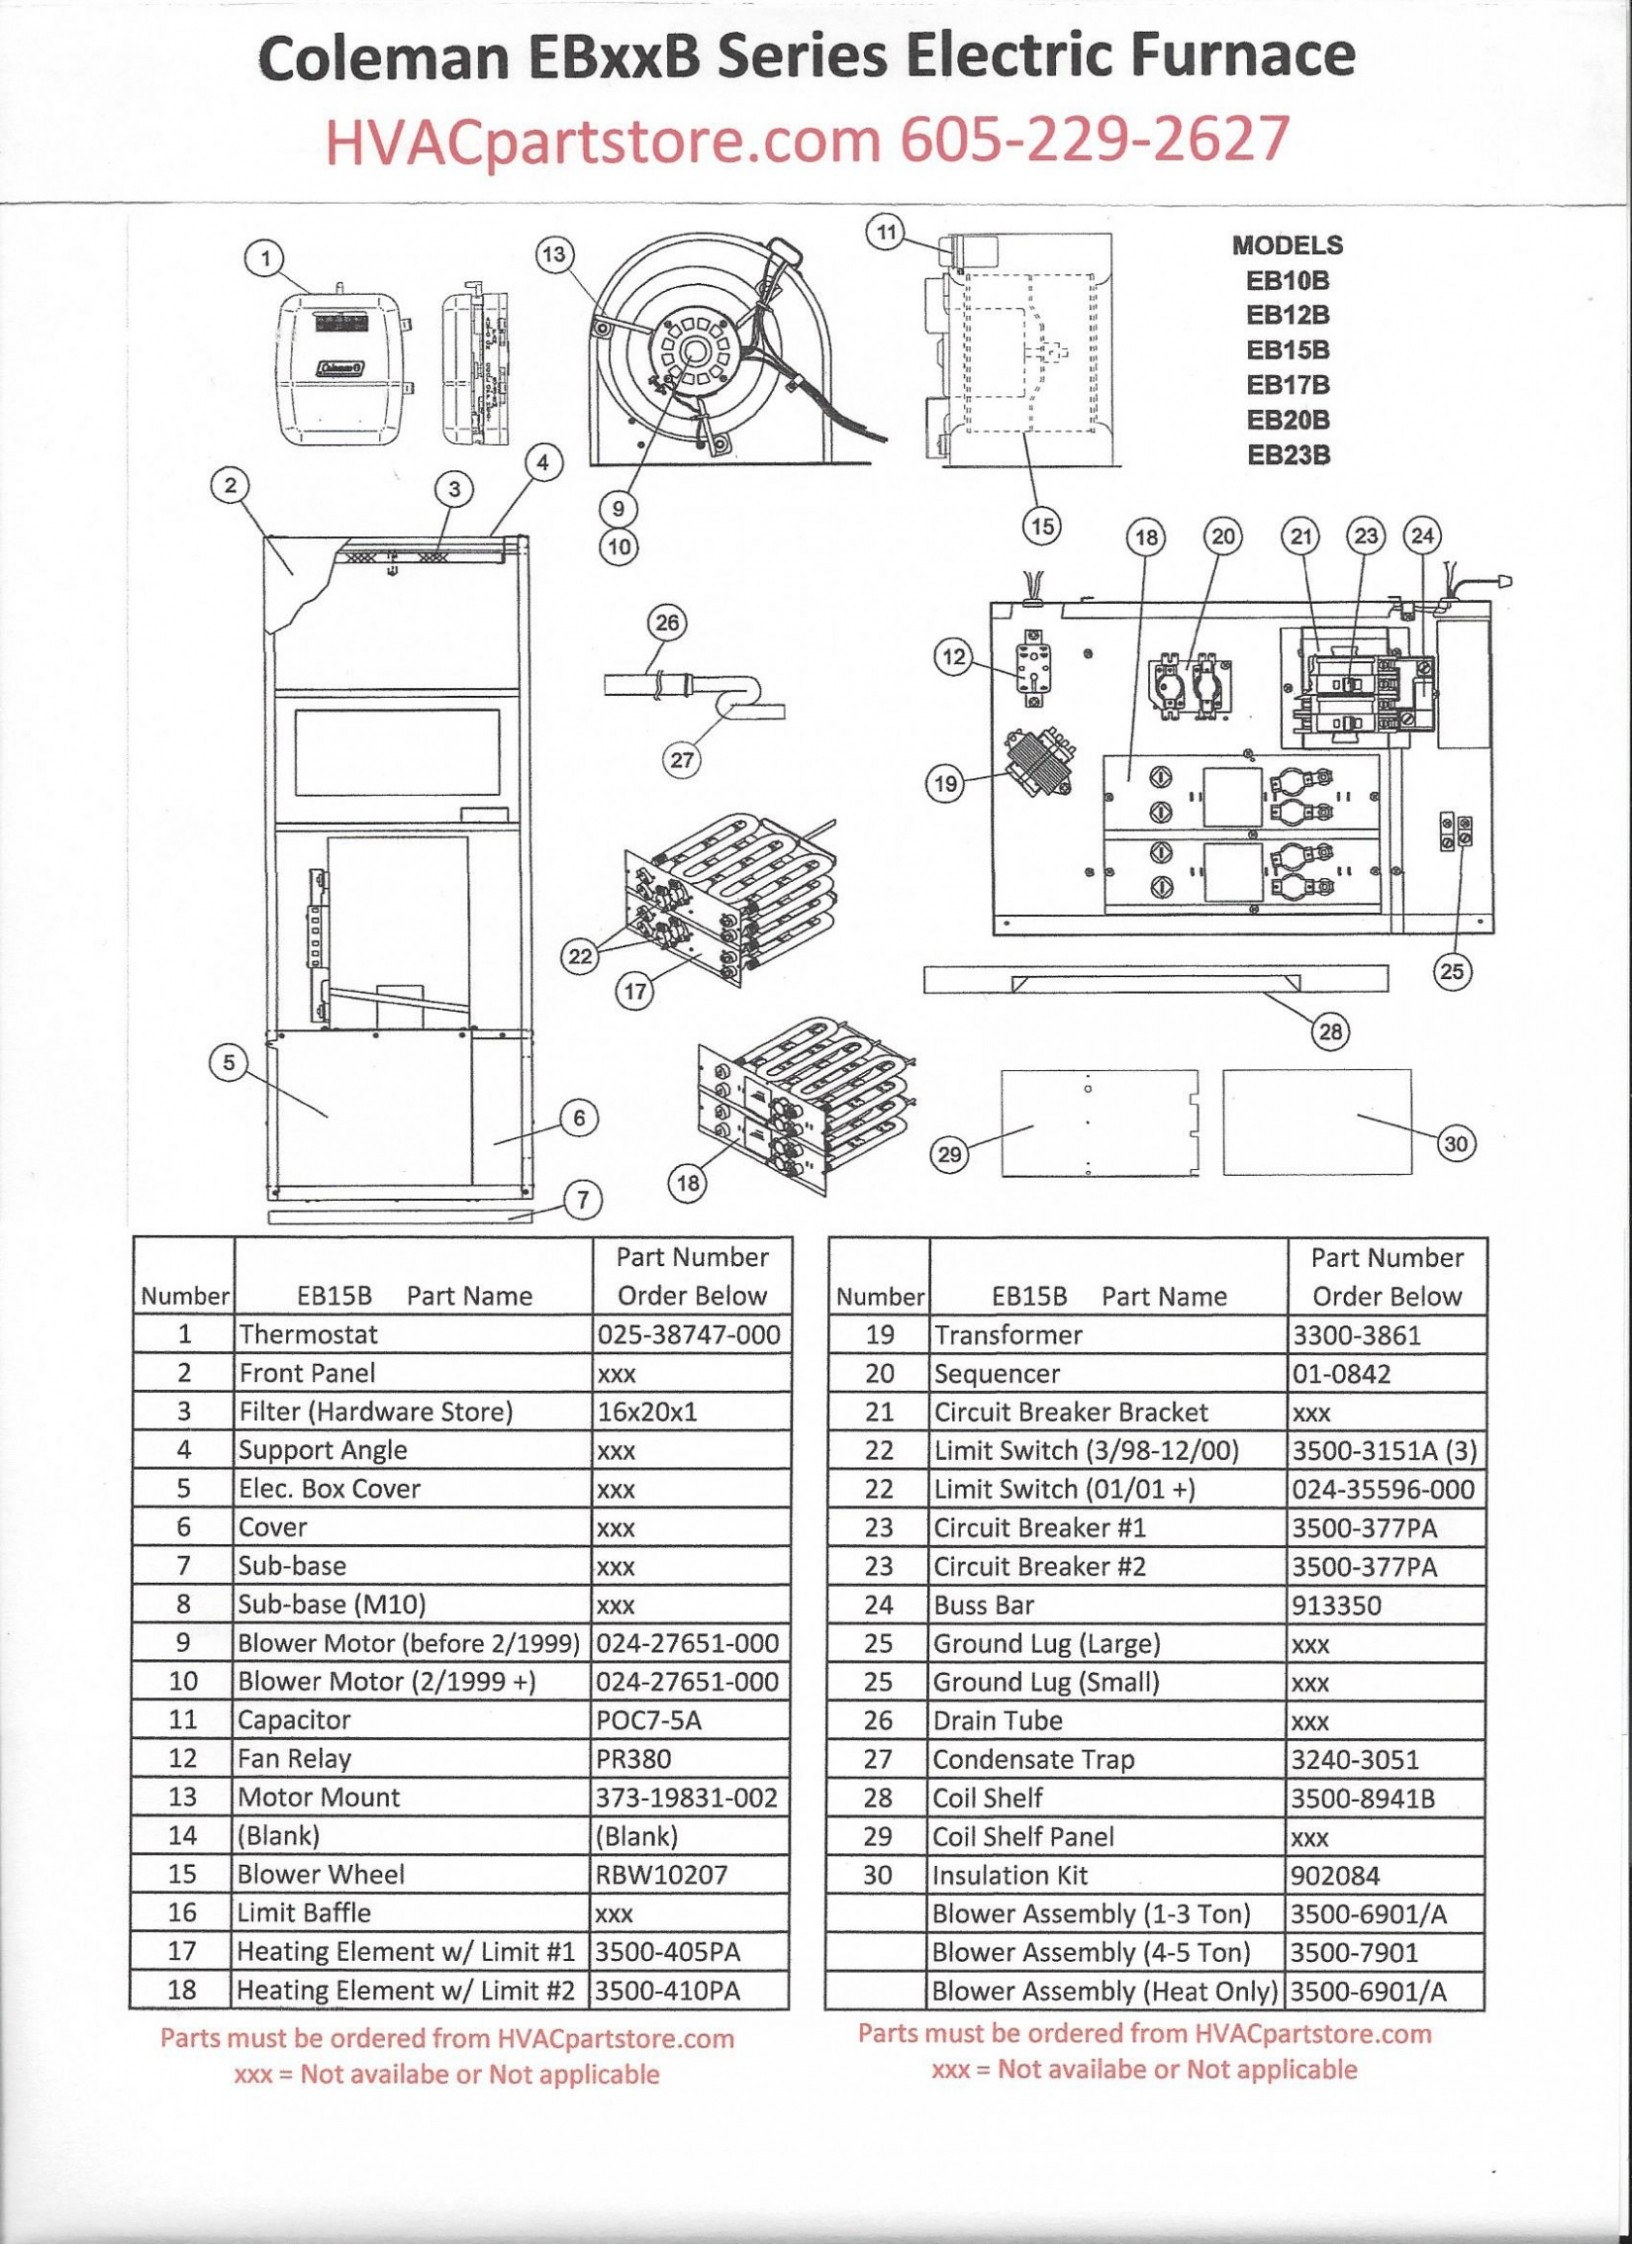 Goodman Furnace Parts Diagram Goodman Gas Furnace Parts Diagram Luxury Goodman Furnace Parts